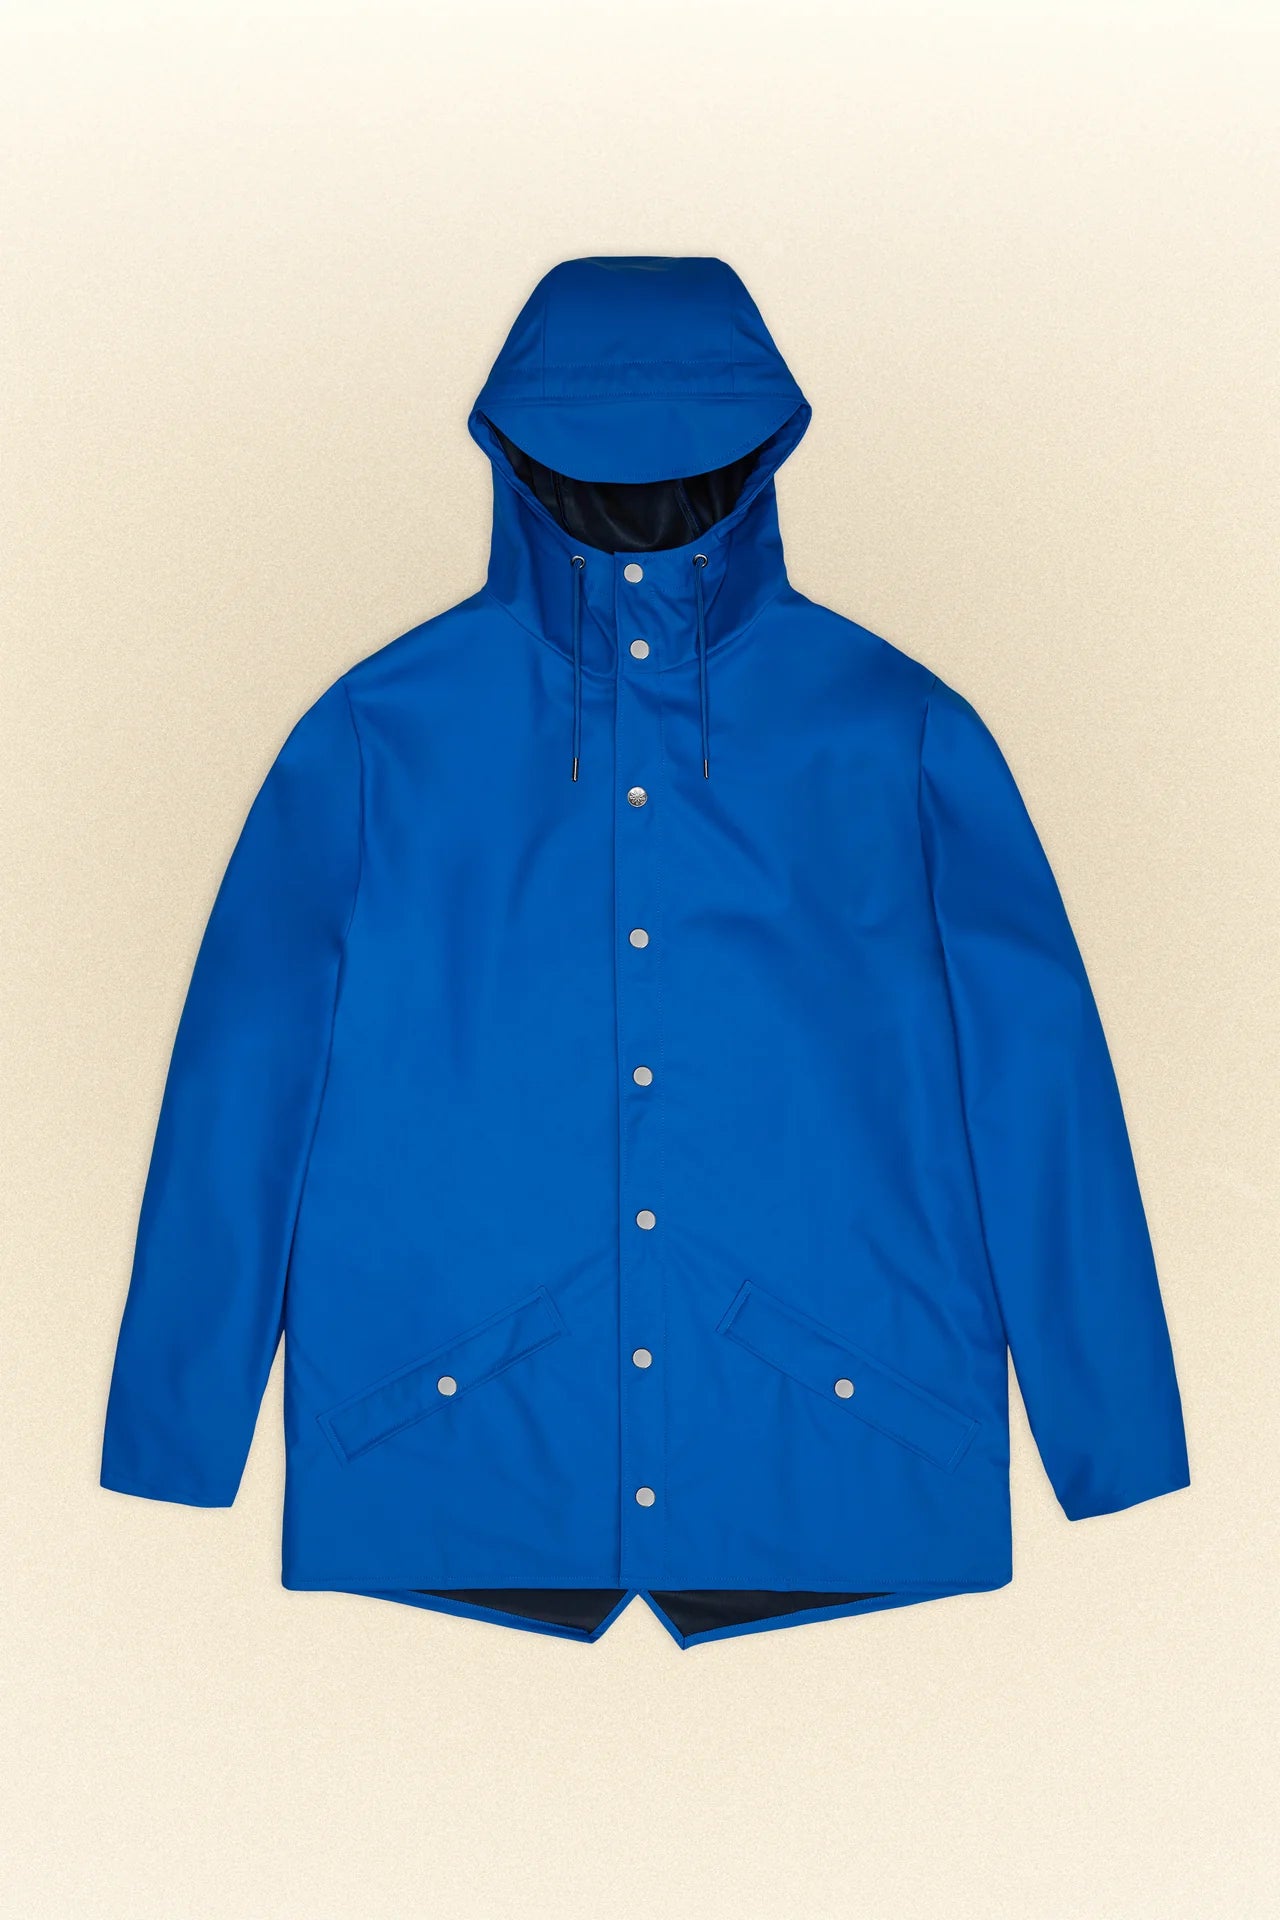 A lightweight blue Rains jacket on a white background.